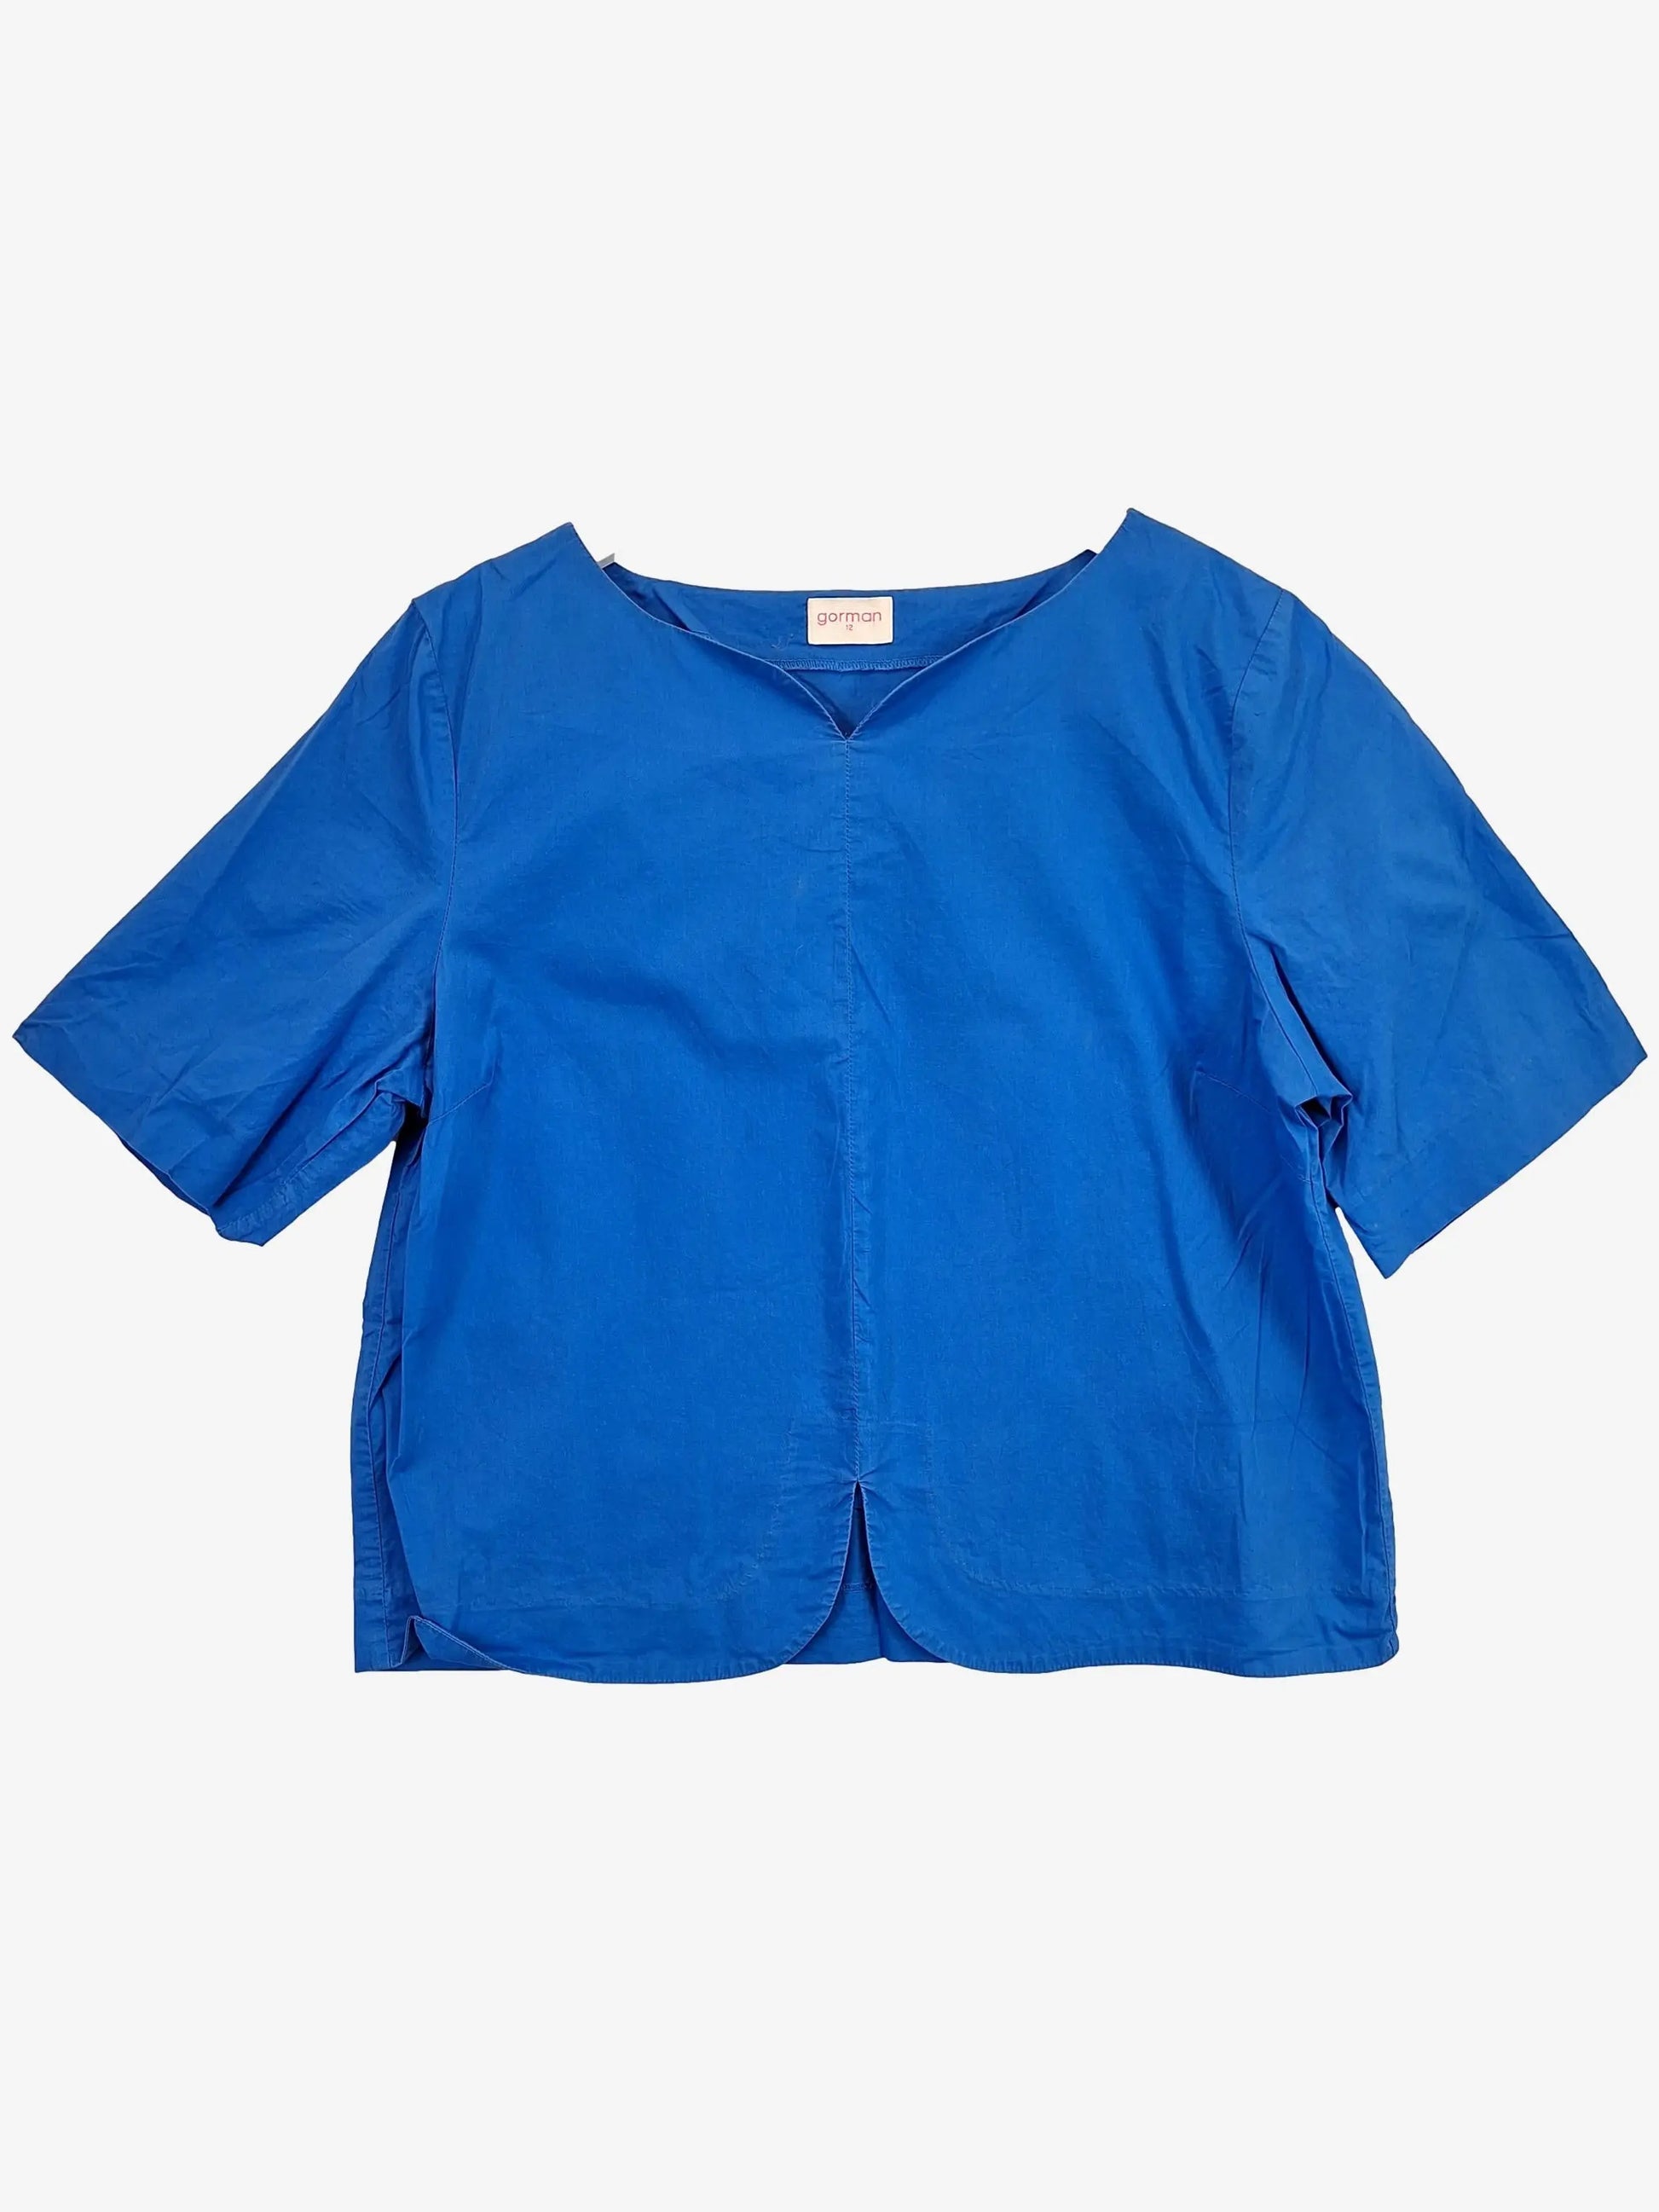 Gorman Basic Cobalt Cotton Top Size 12 by SwapUp-Online Second Hand Store-Online Thrift Store